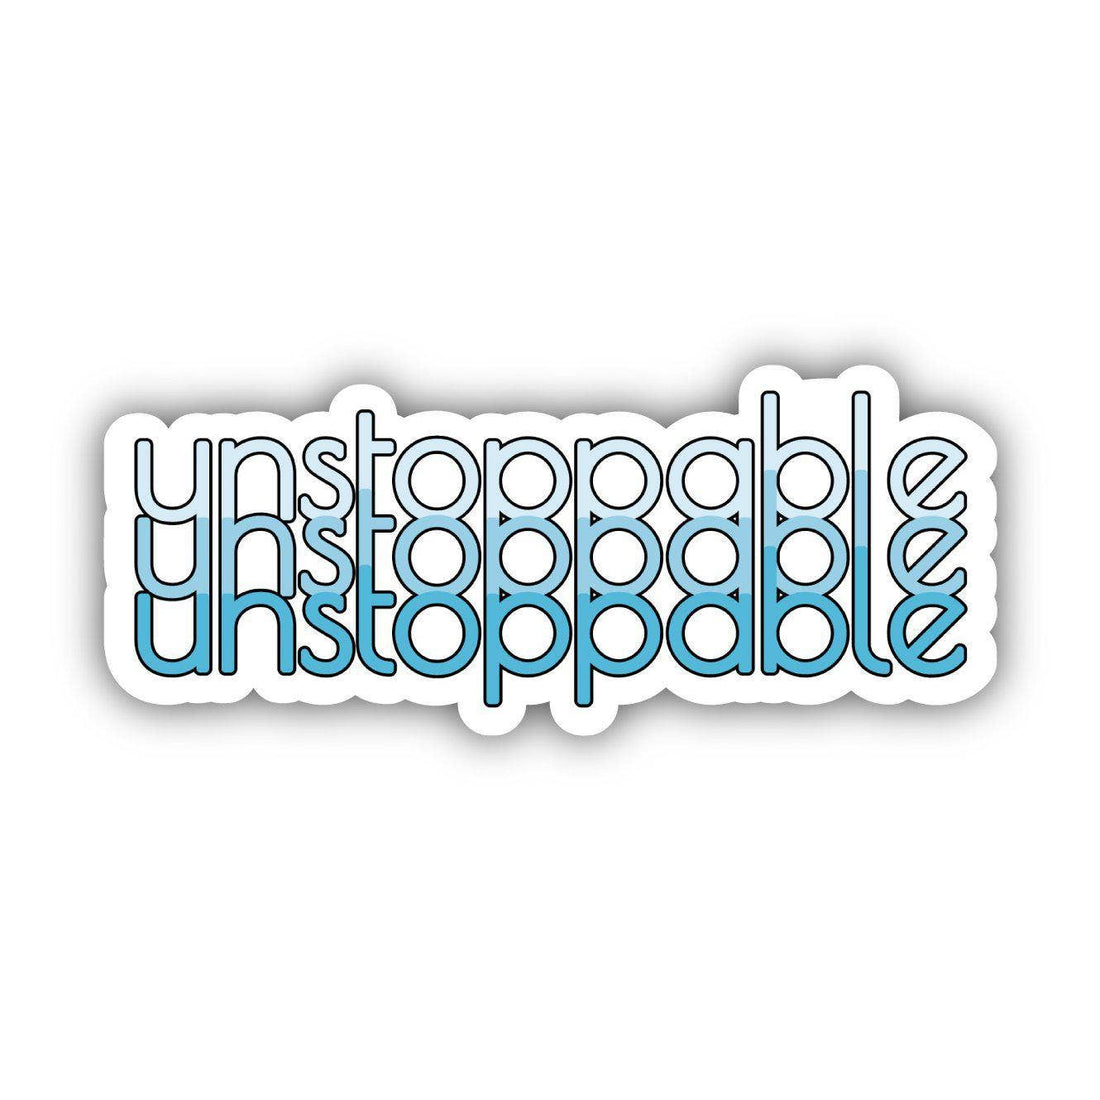 Unstoppable Sticker